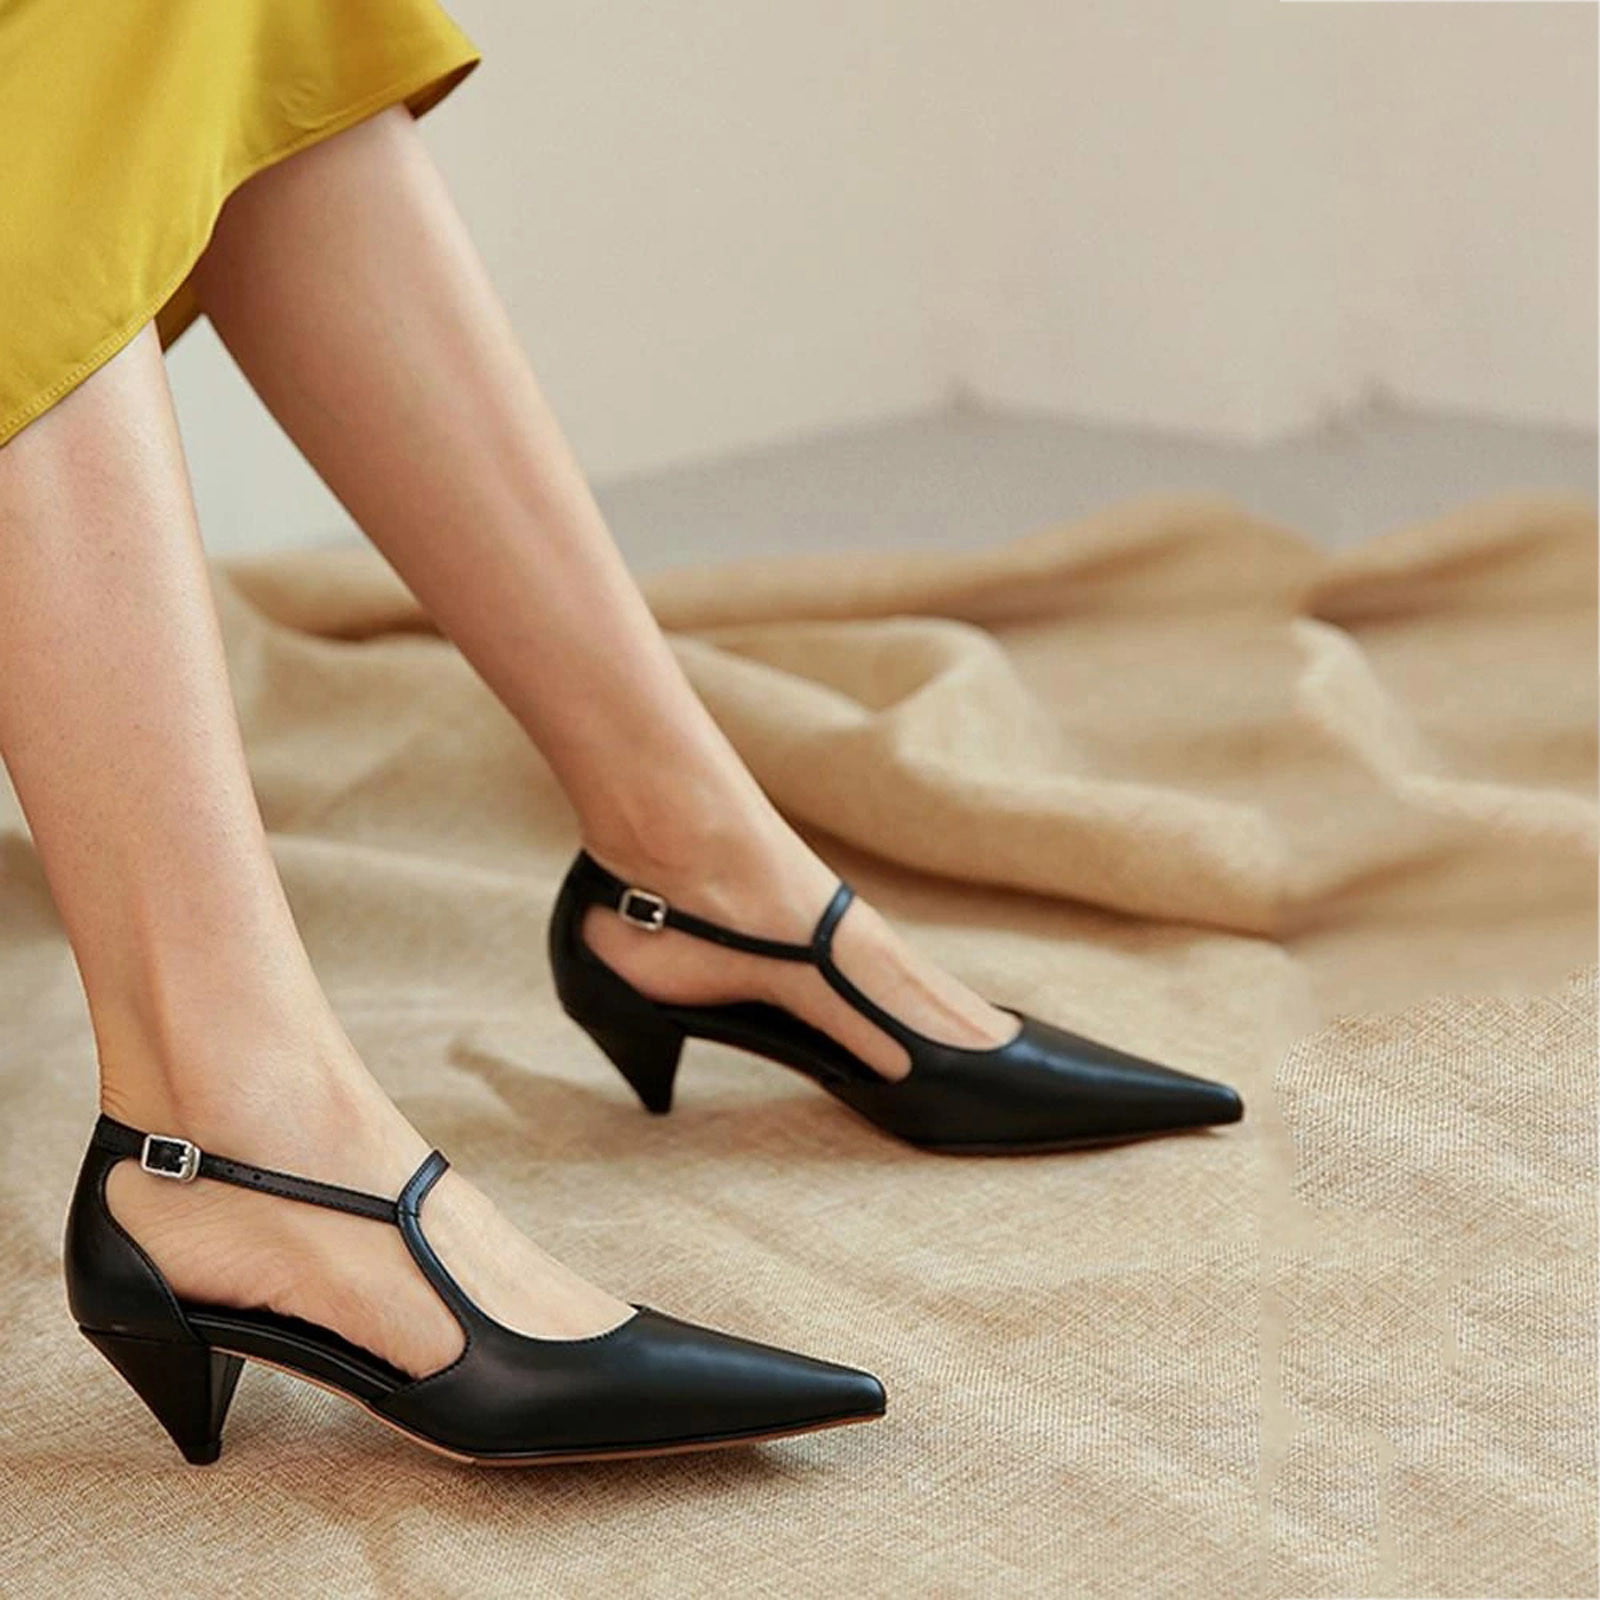 Amazon.com: Women's Black Dress Shoes Low Heel